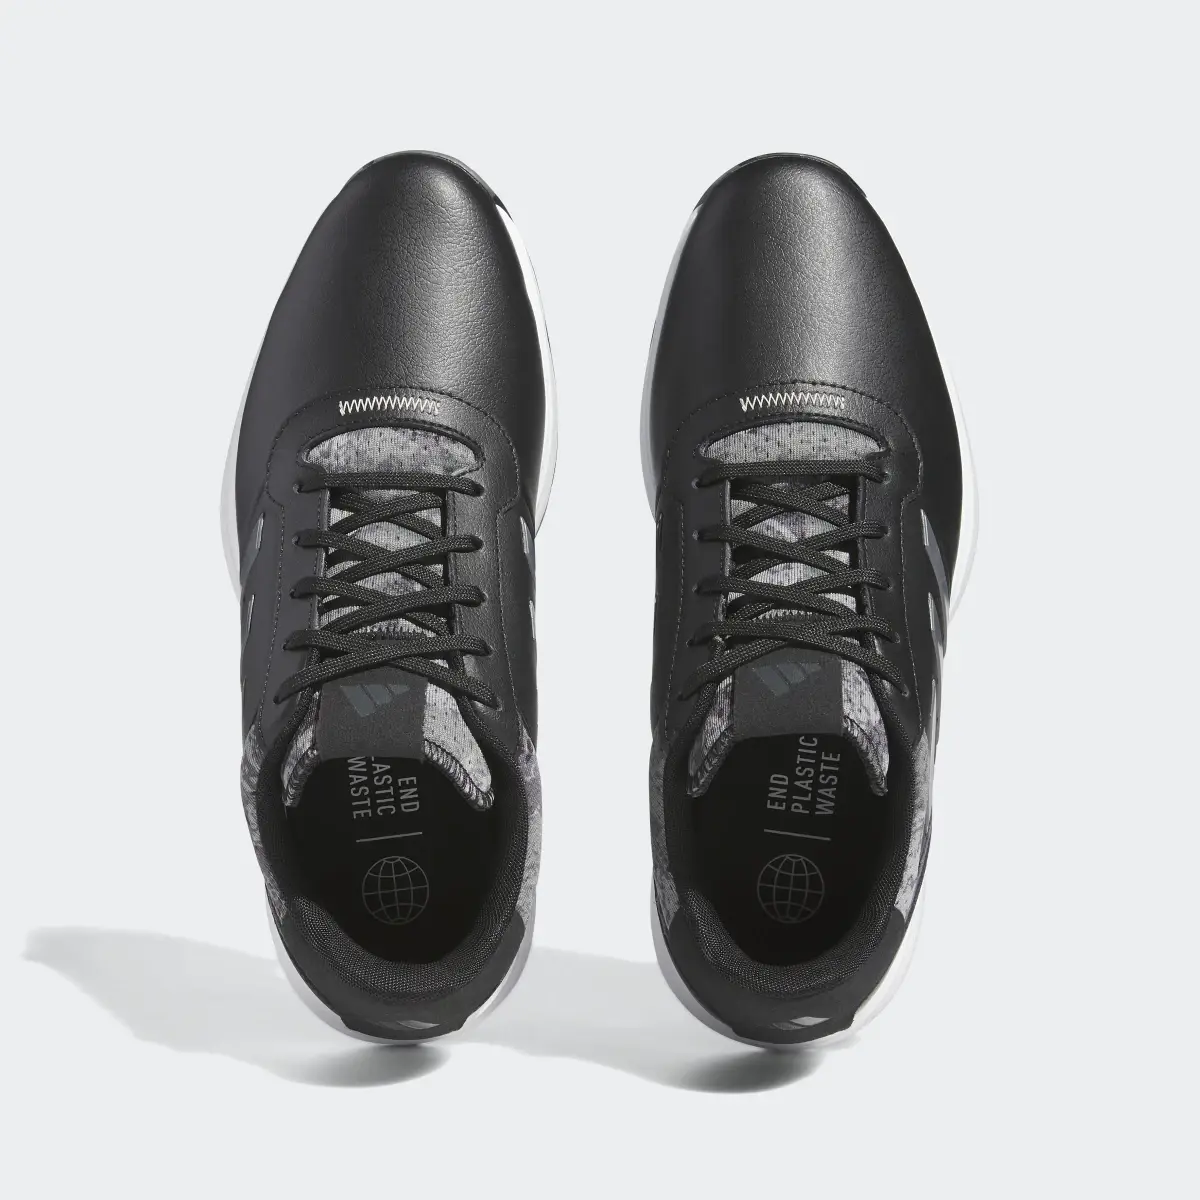 Adidas S2G SL Golf Shoes. 3